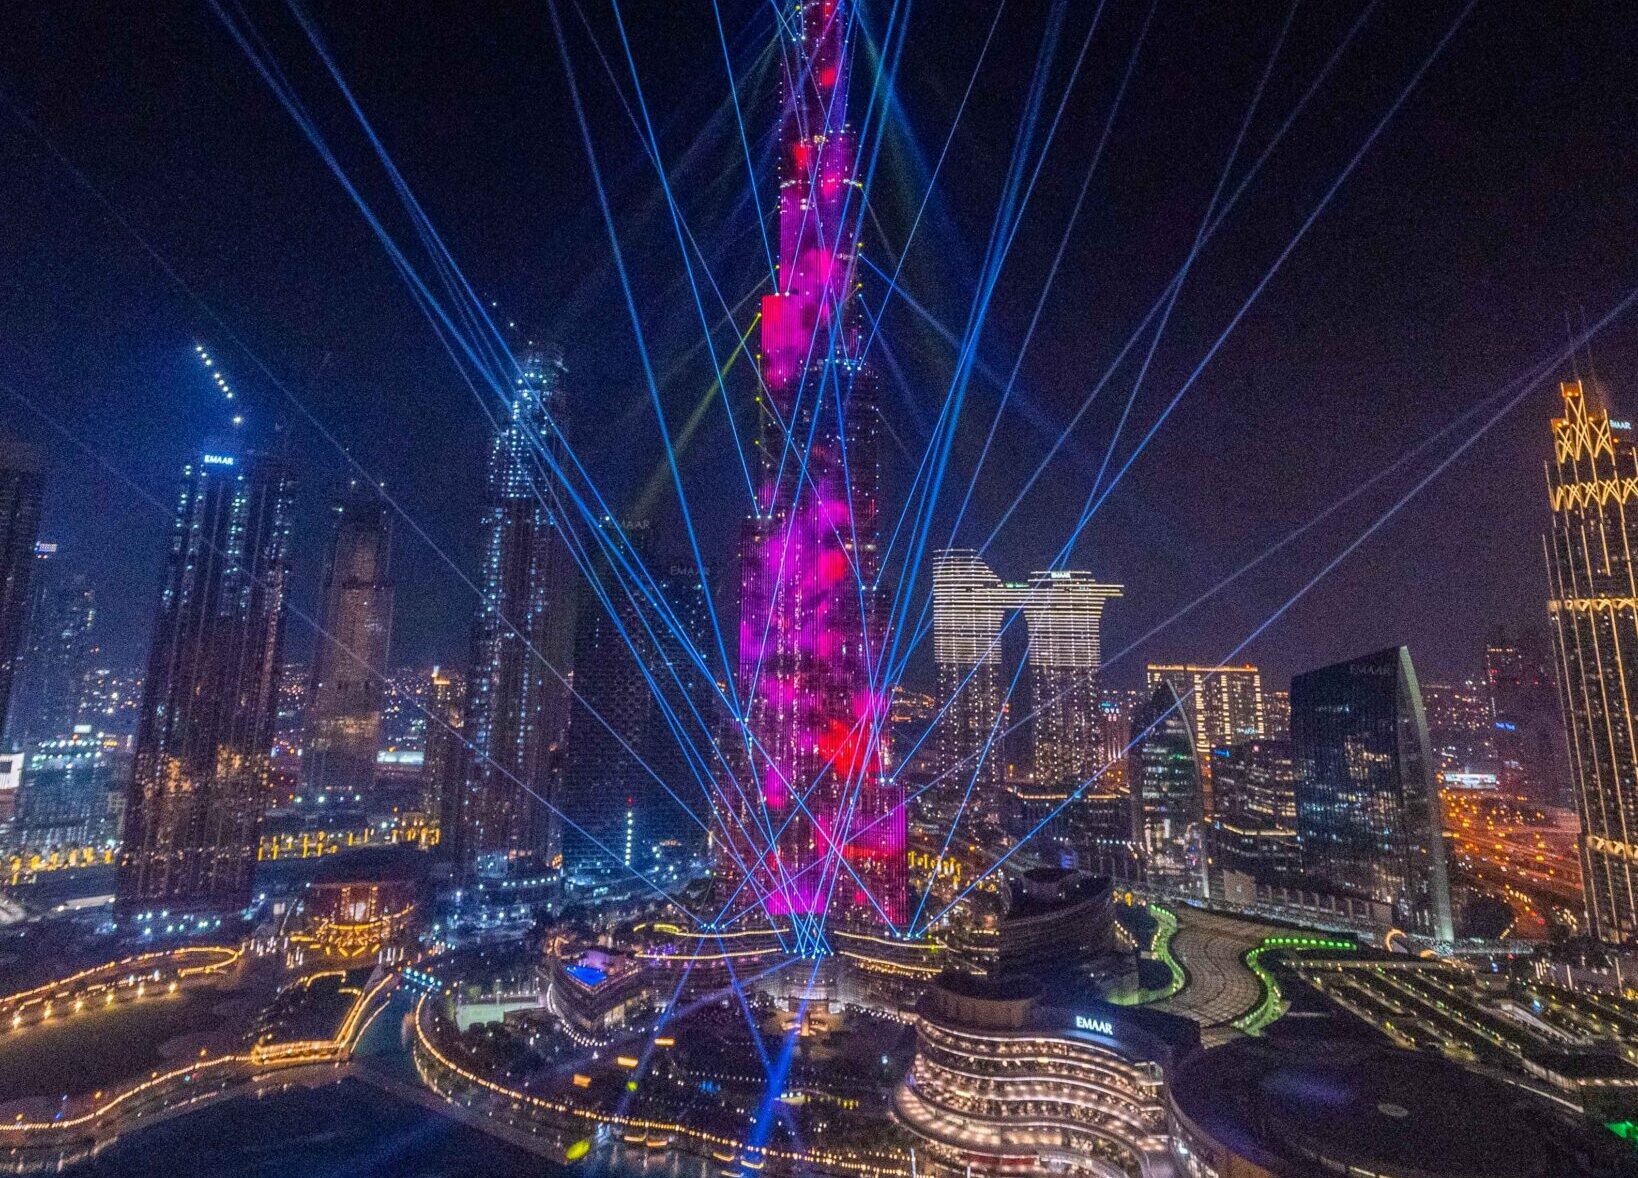 of Colour! Burj Khalifa's LED show Downtown Dubai's skyline